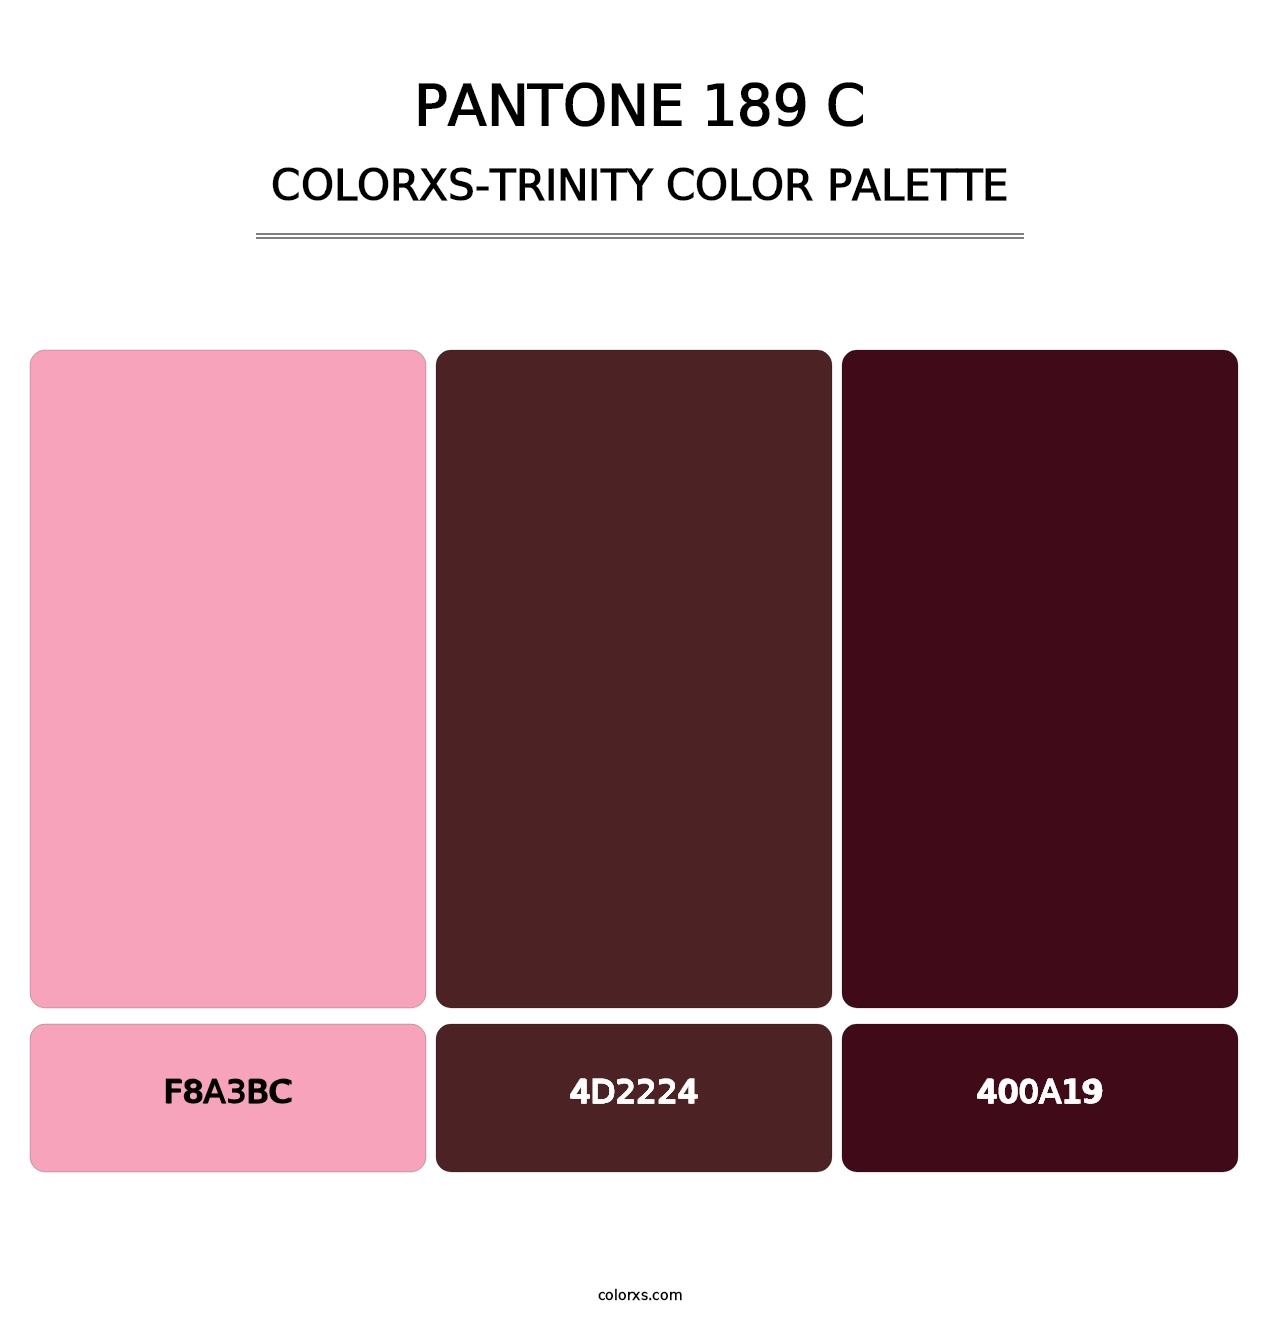 PANTONE 189 C - Colorxs Trinity Palette